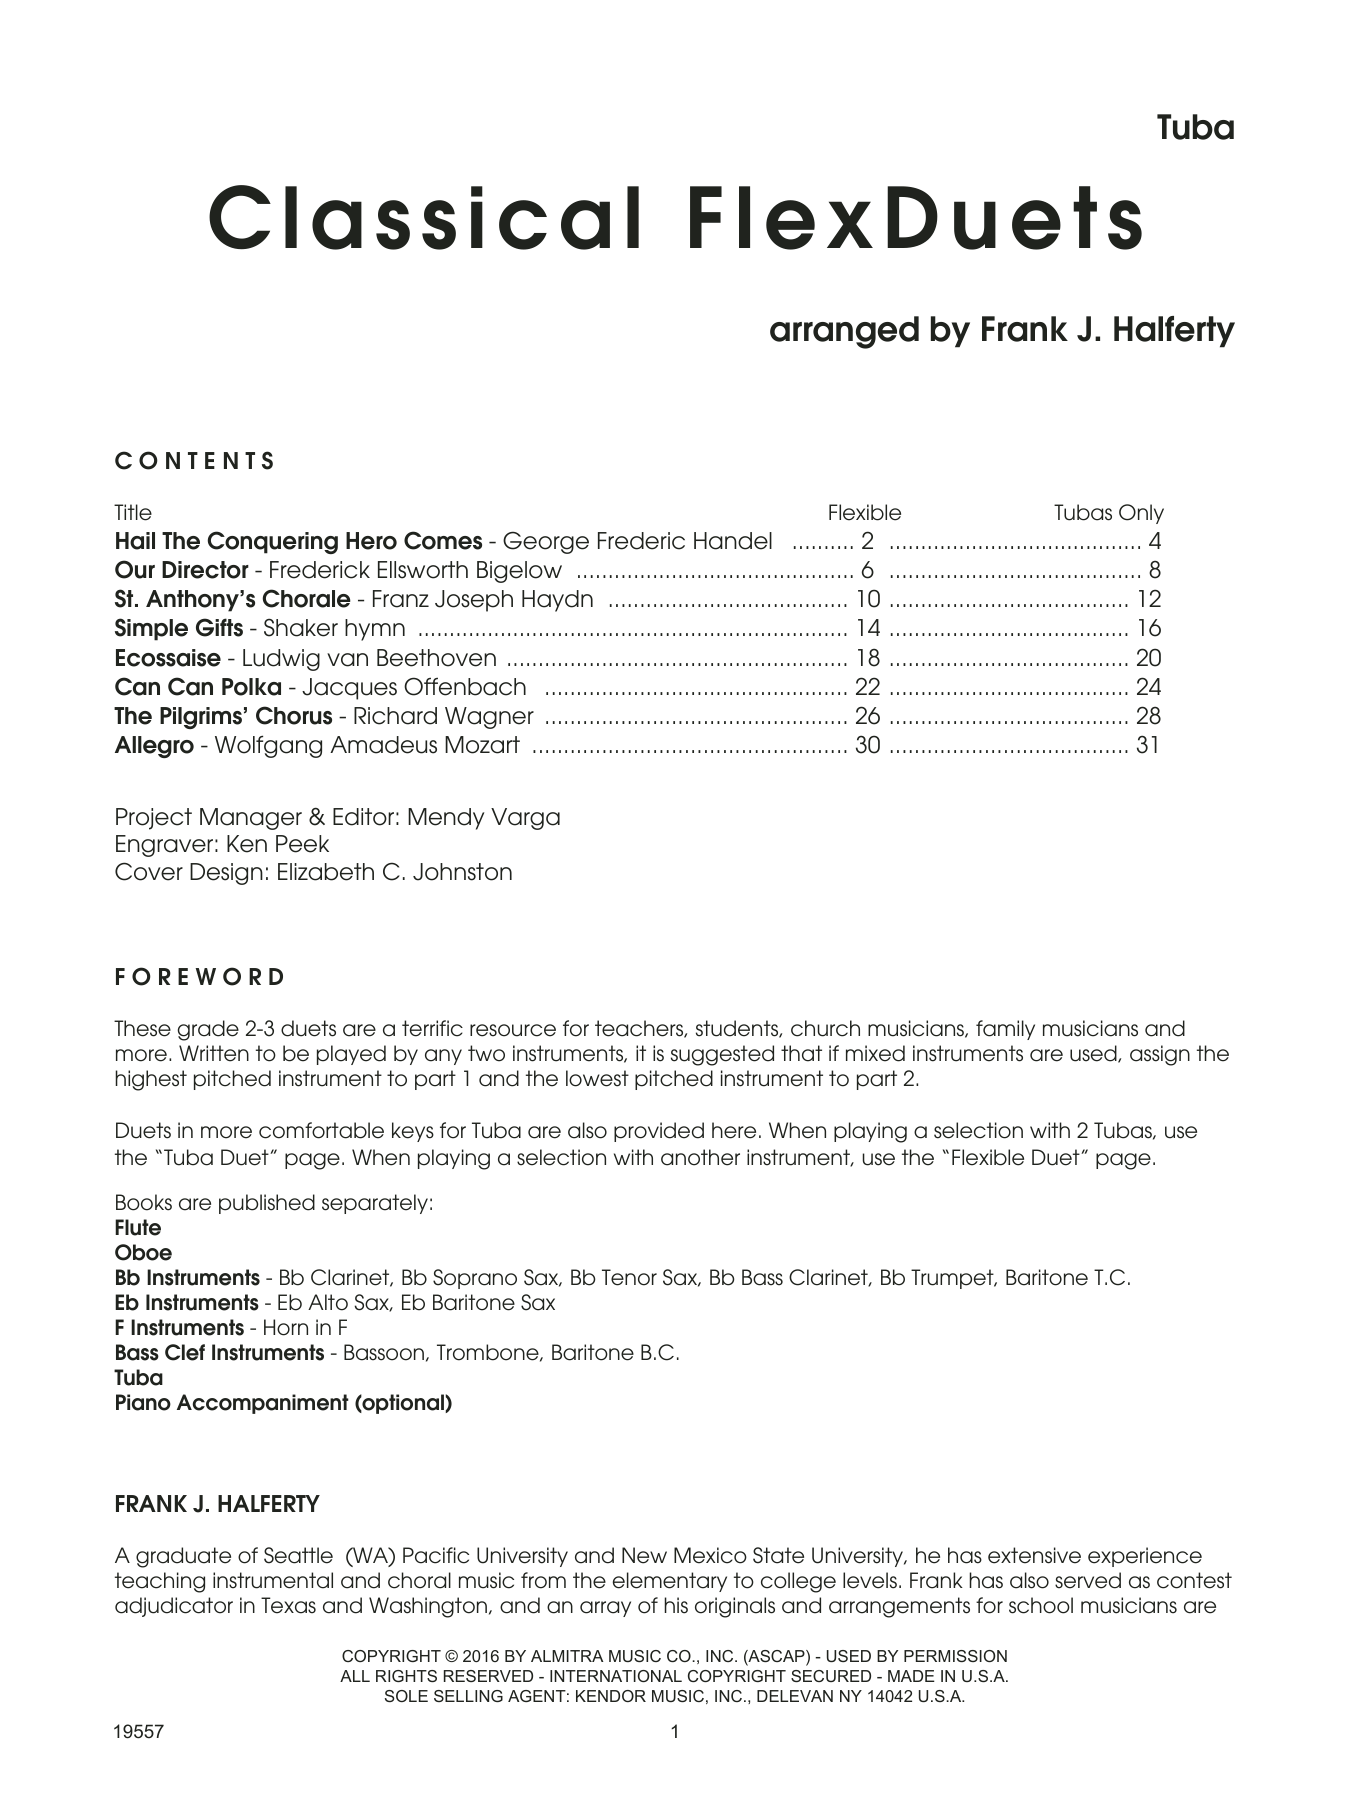 Frank J. Halferty Classical FlexDuets - Tuba sheet music notes and chords. Download Printable PDF.